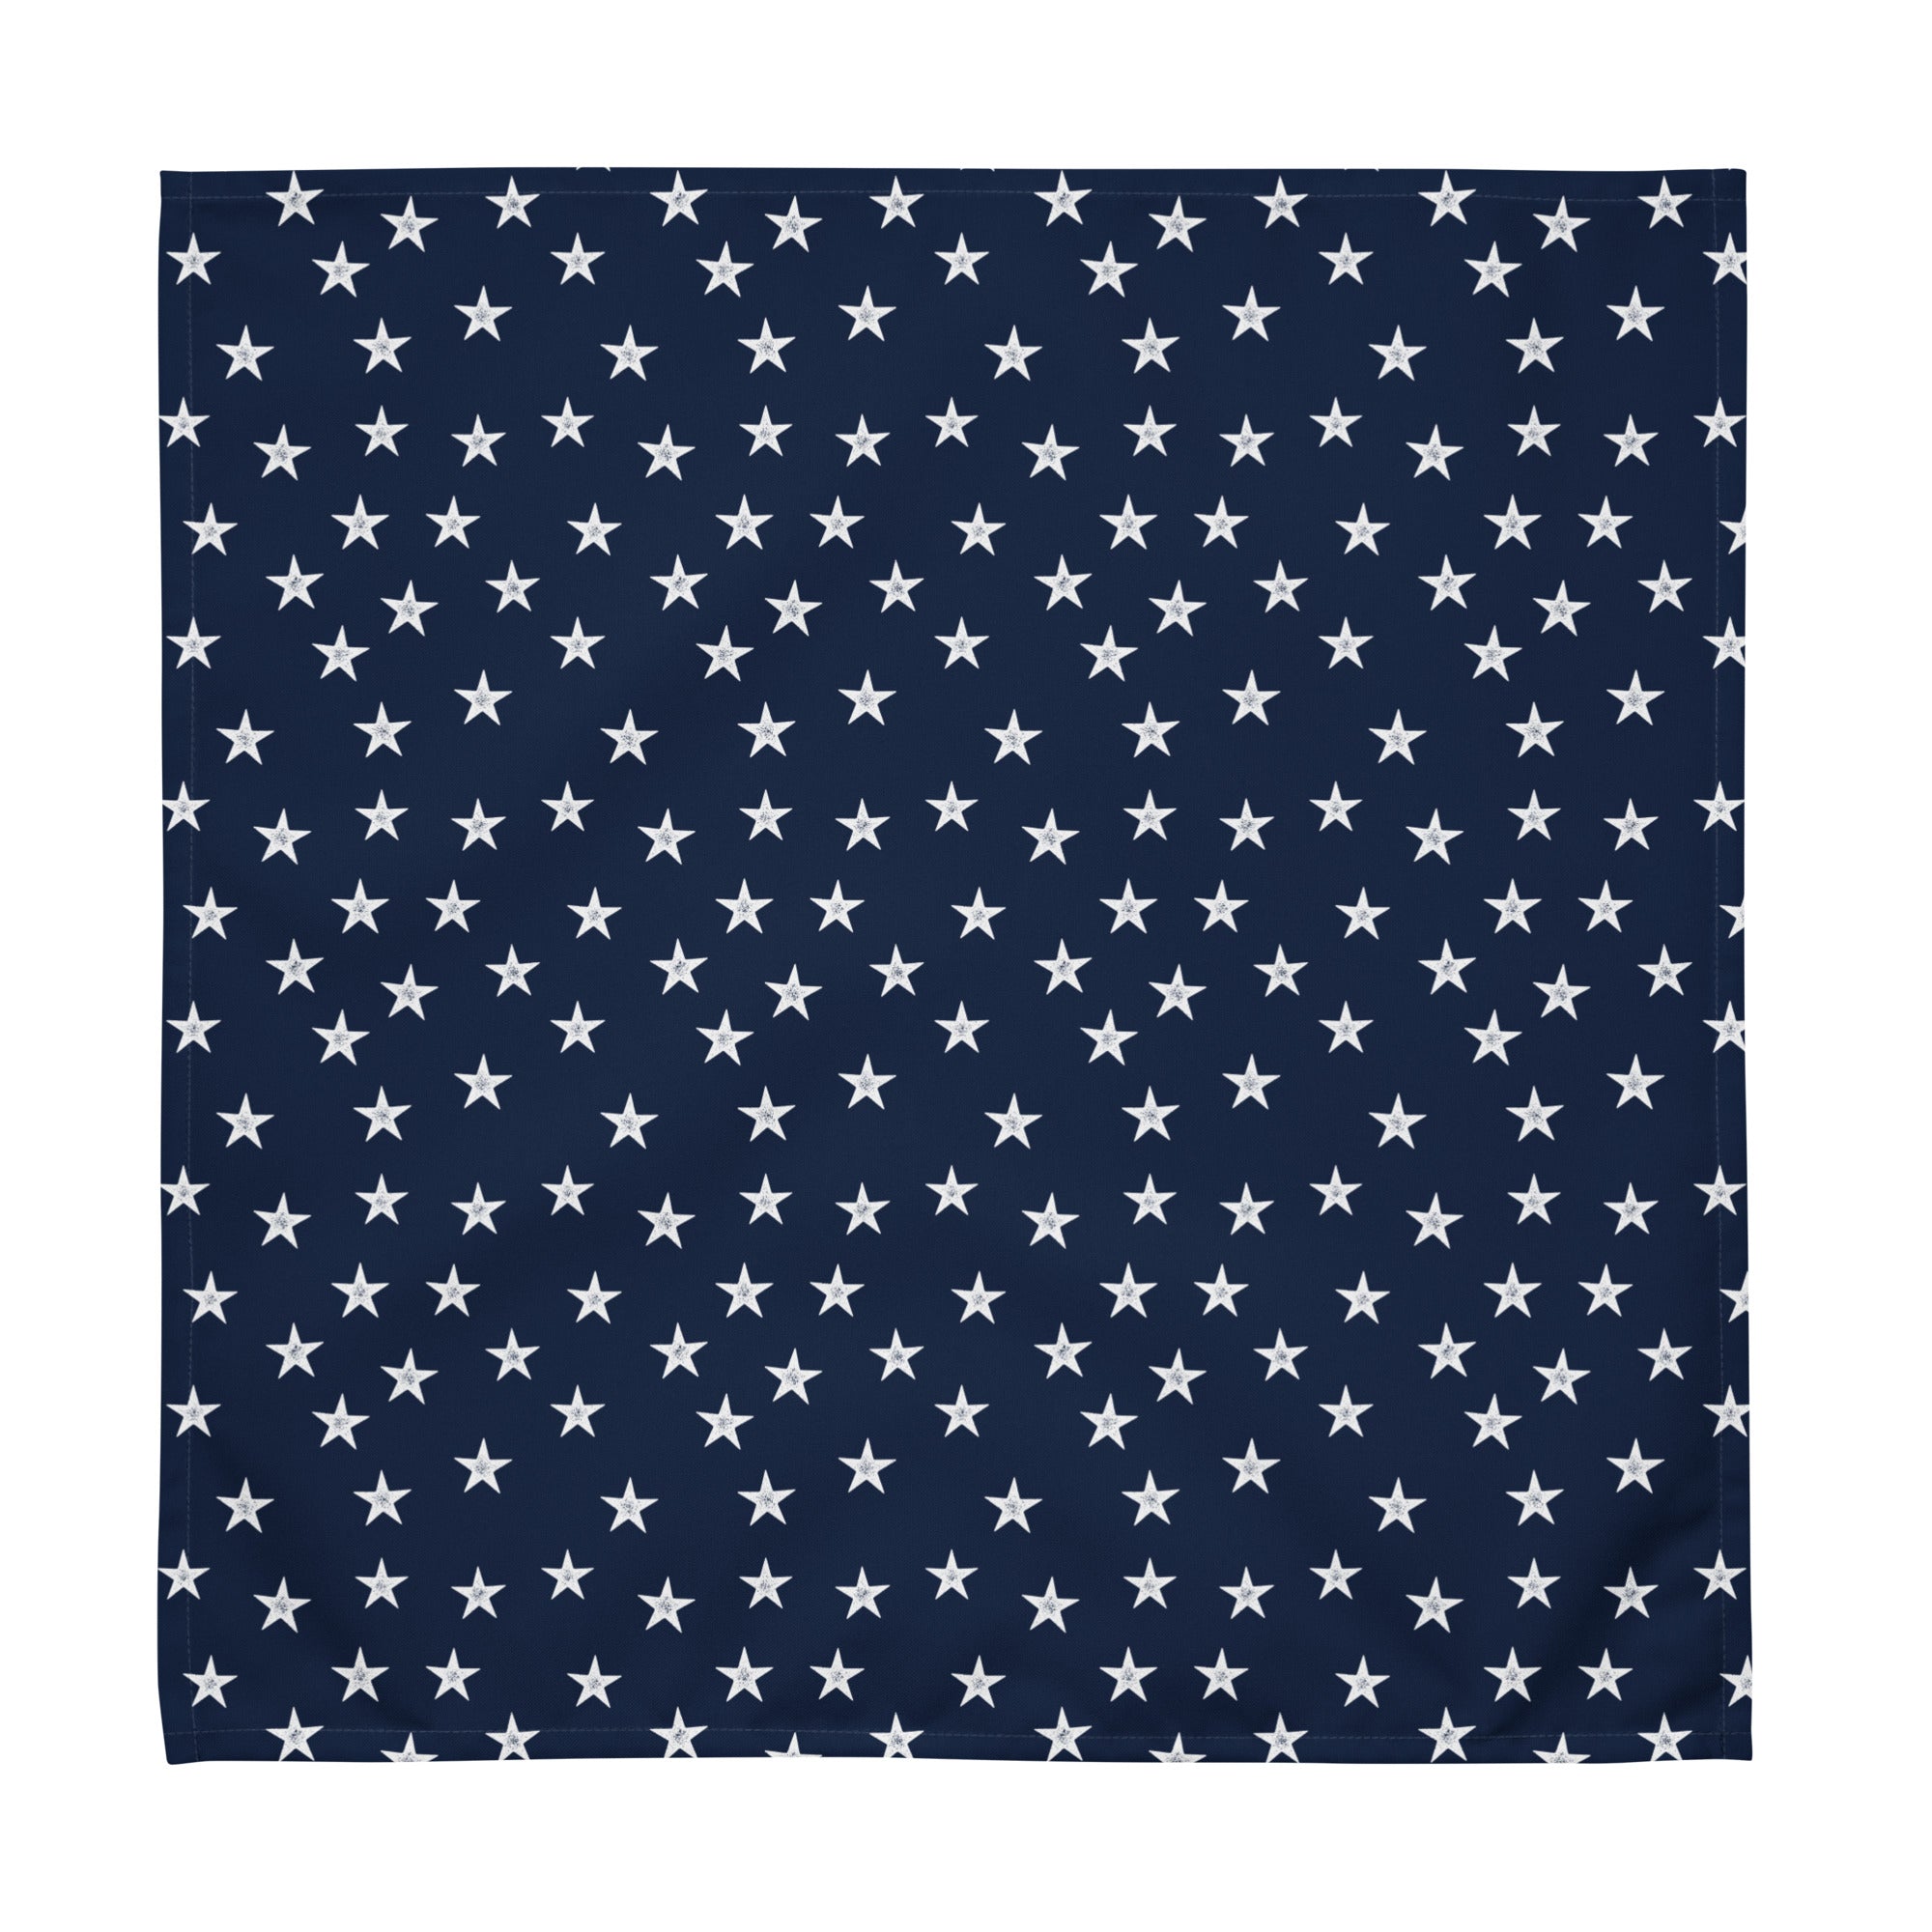 Colonial Stars Cloth napkin set